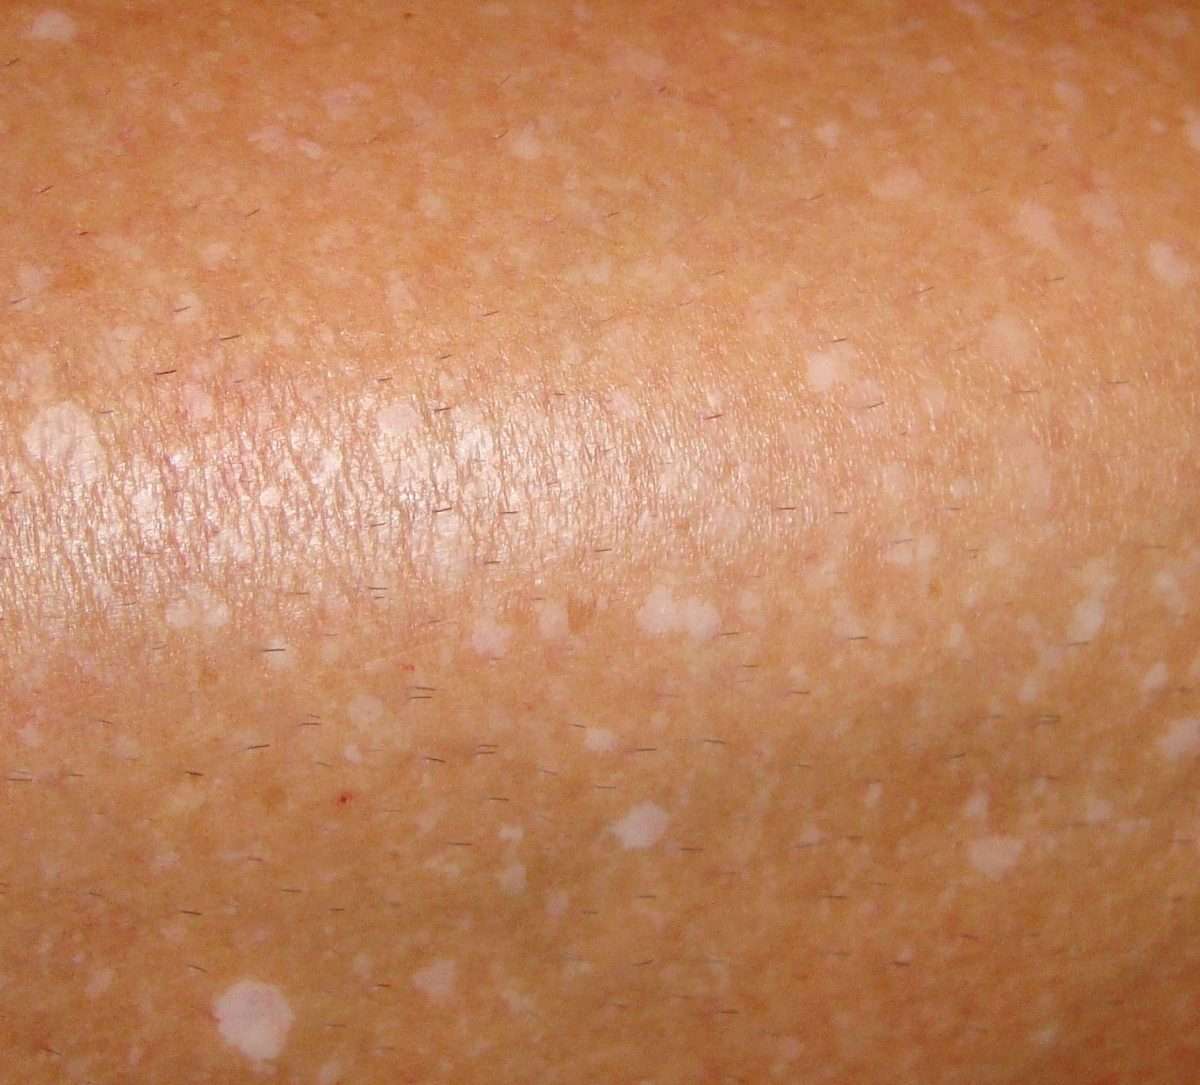 White Dry Spots On Skin